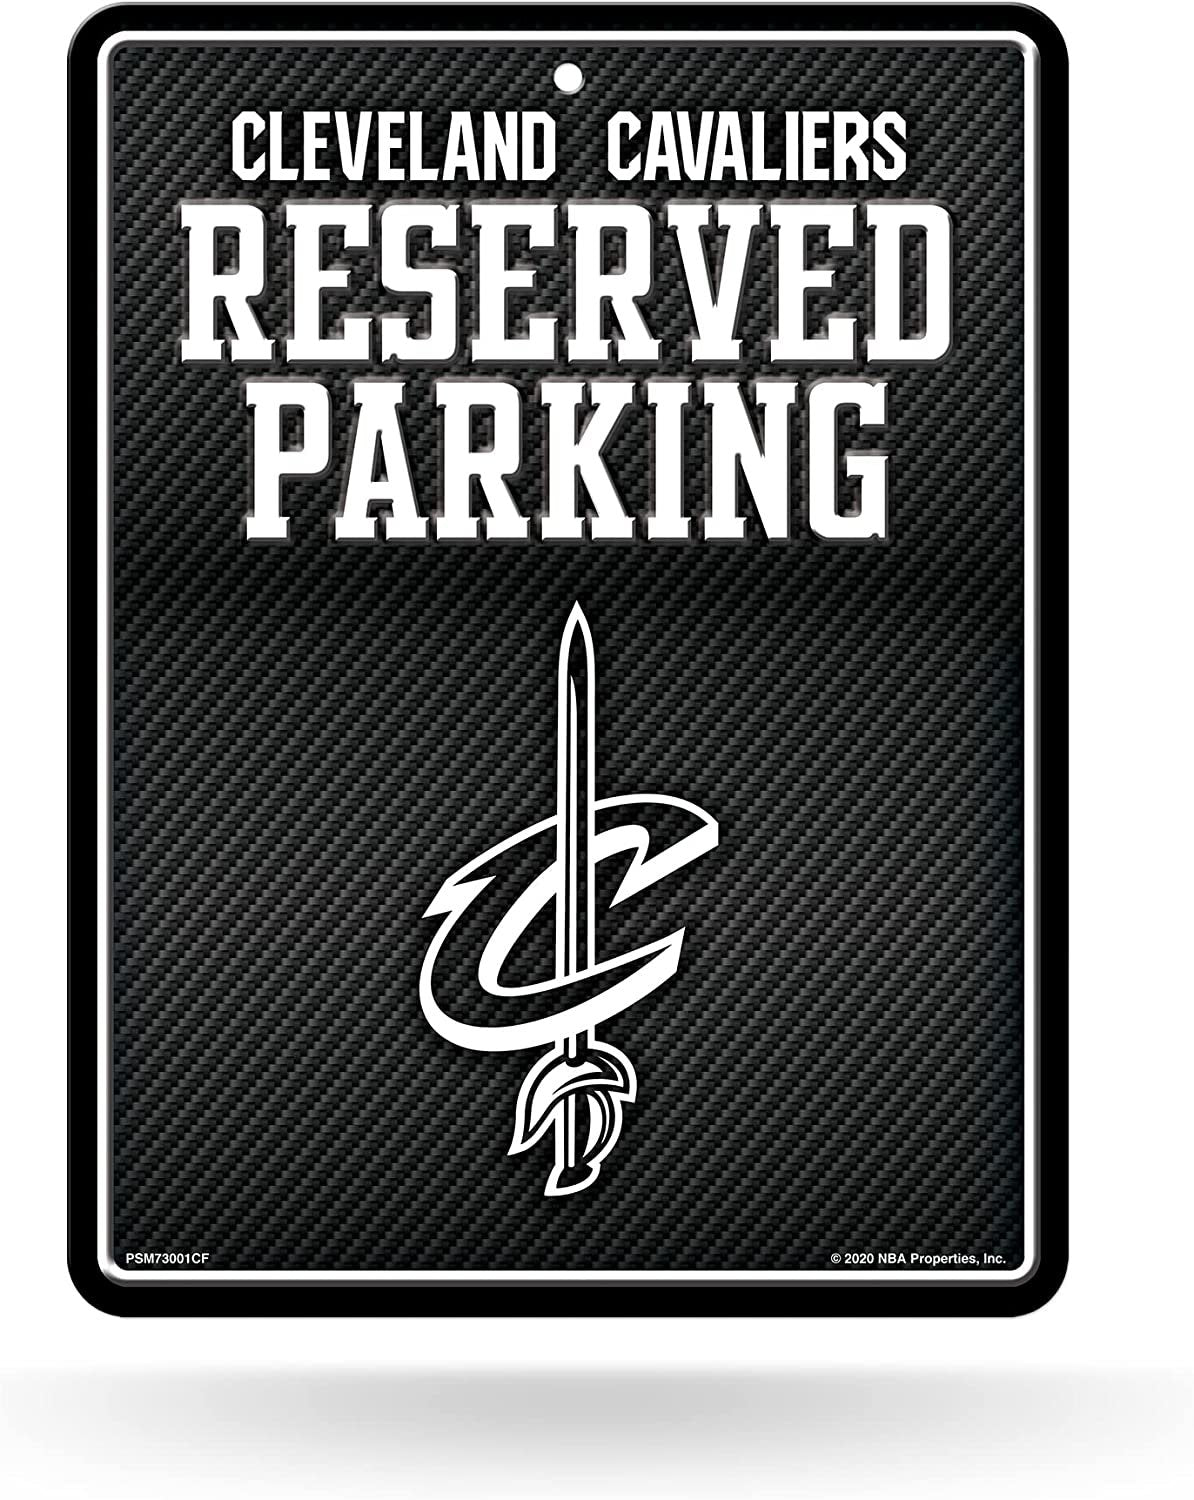 Cleveland Cavaliers Metal Parking Novelty Wall Sign 8.5 x 11 Inch Carbon Fiber Design